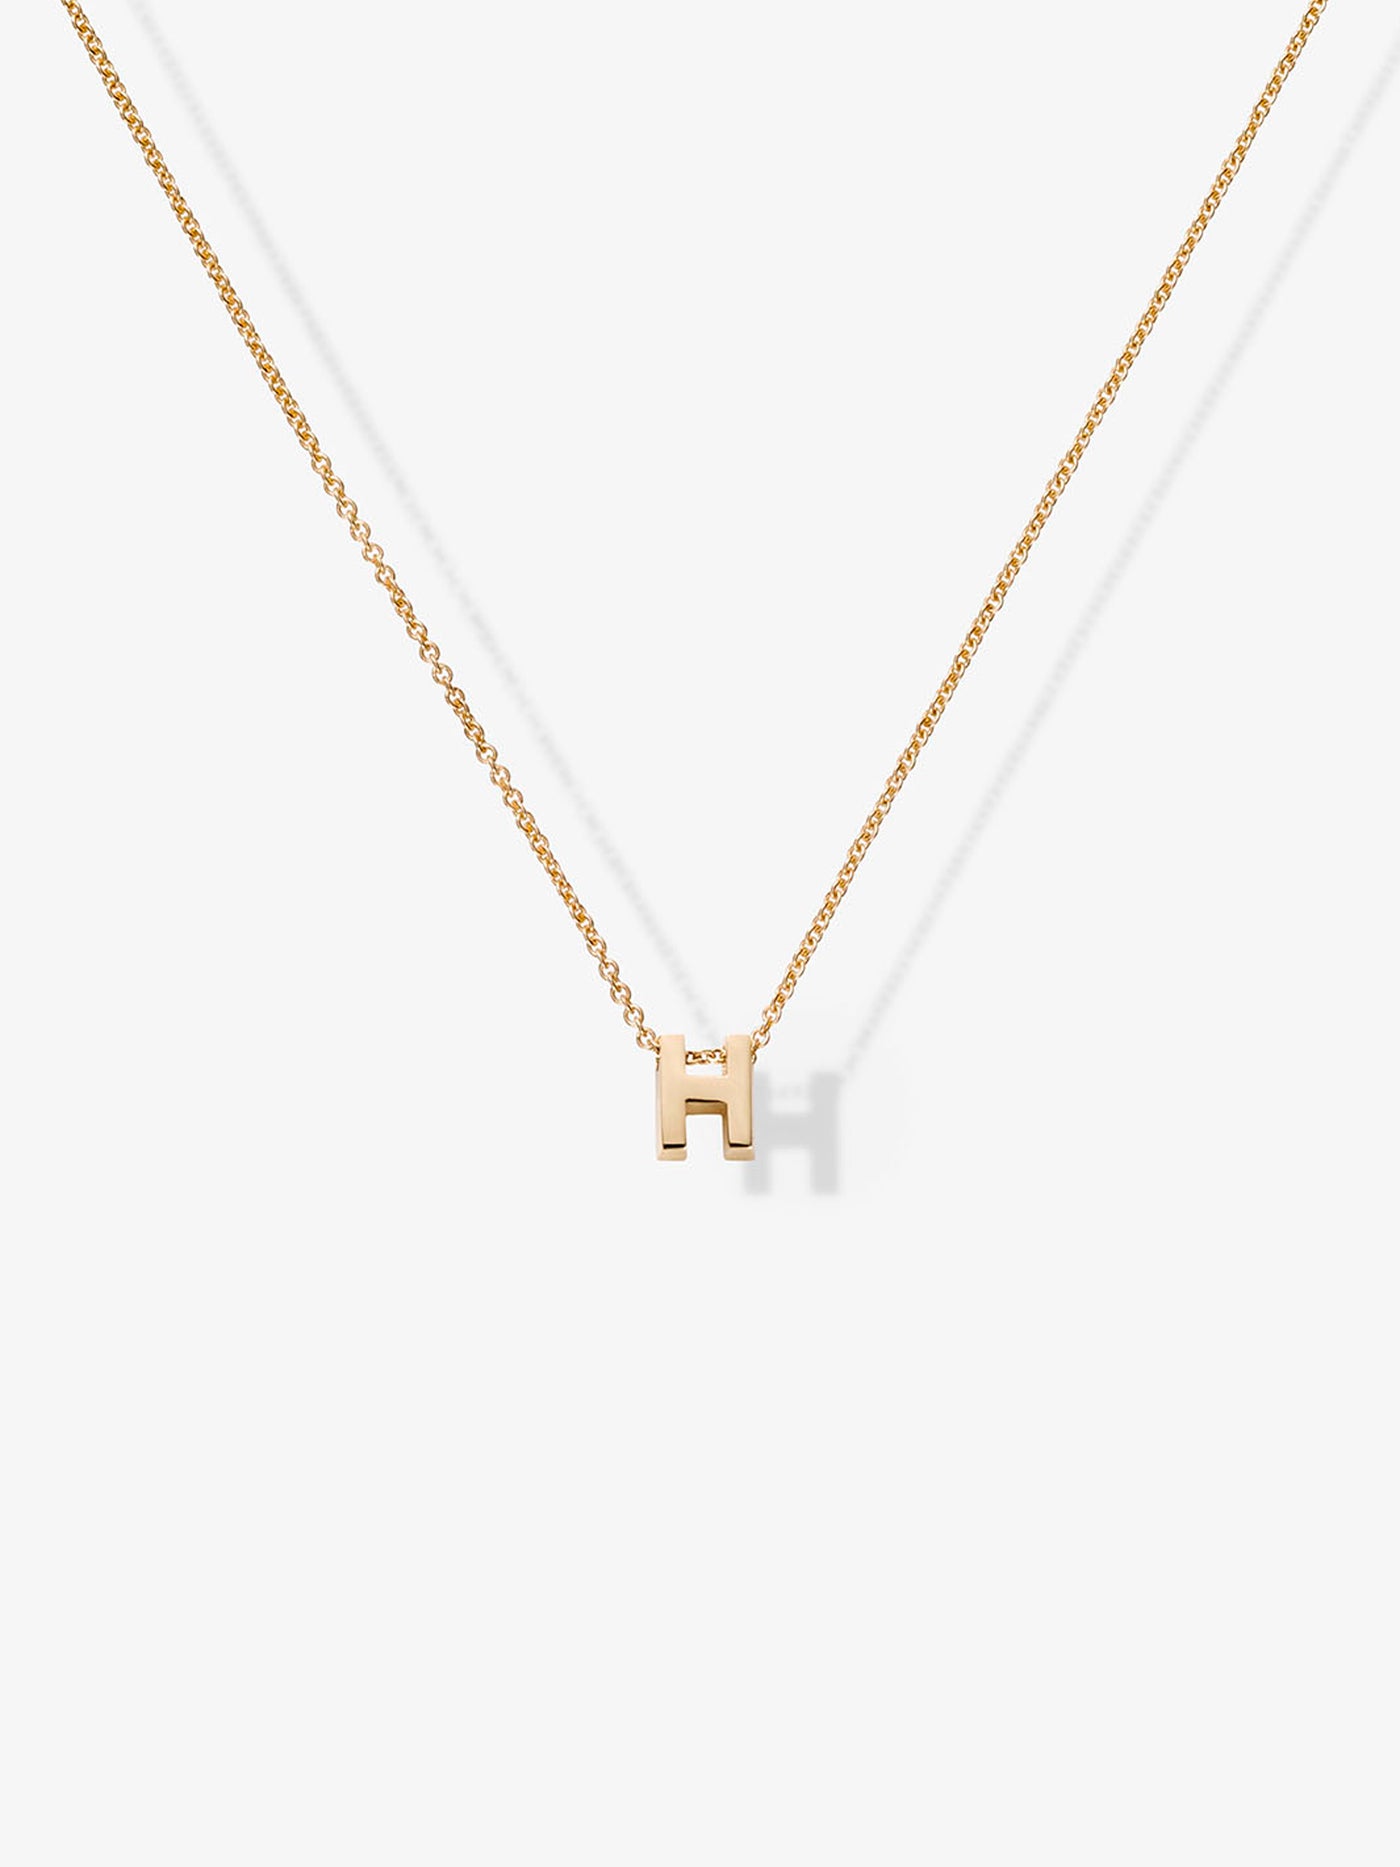 Letter H Necklace in 18k Gold